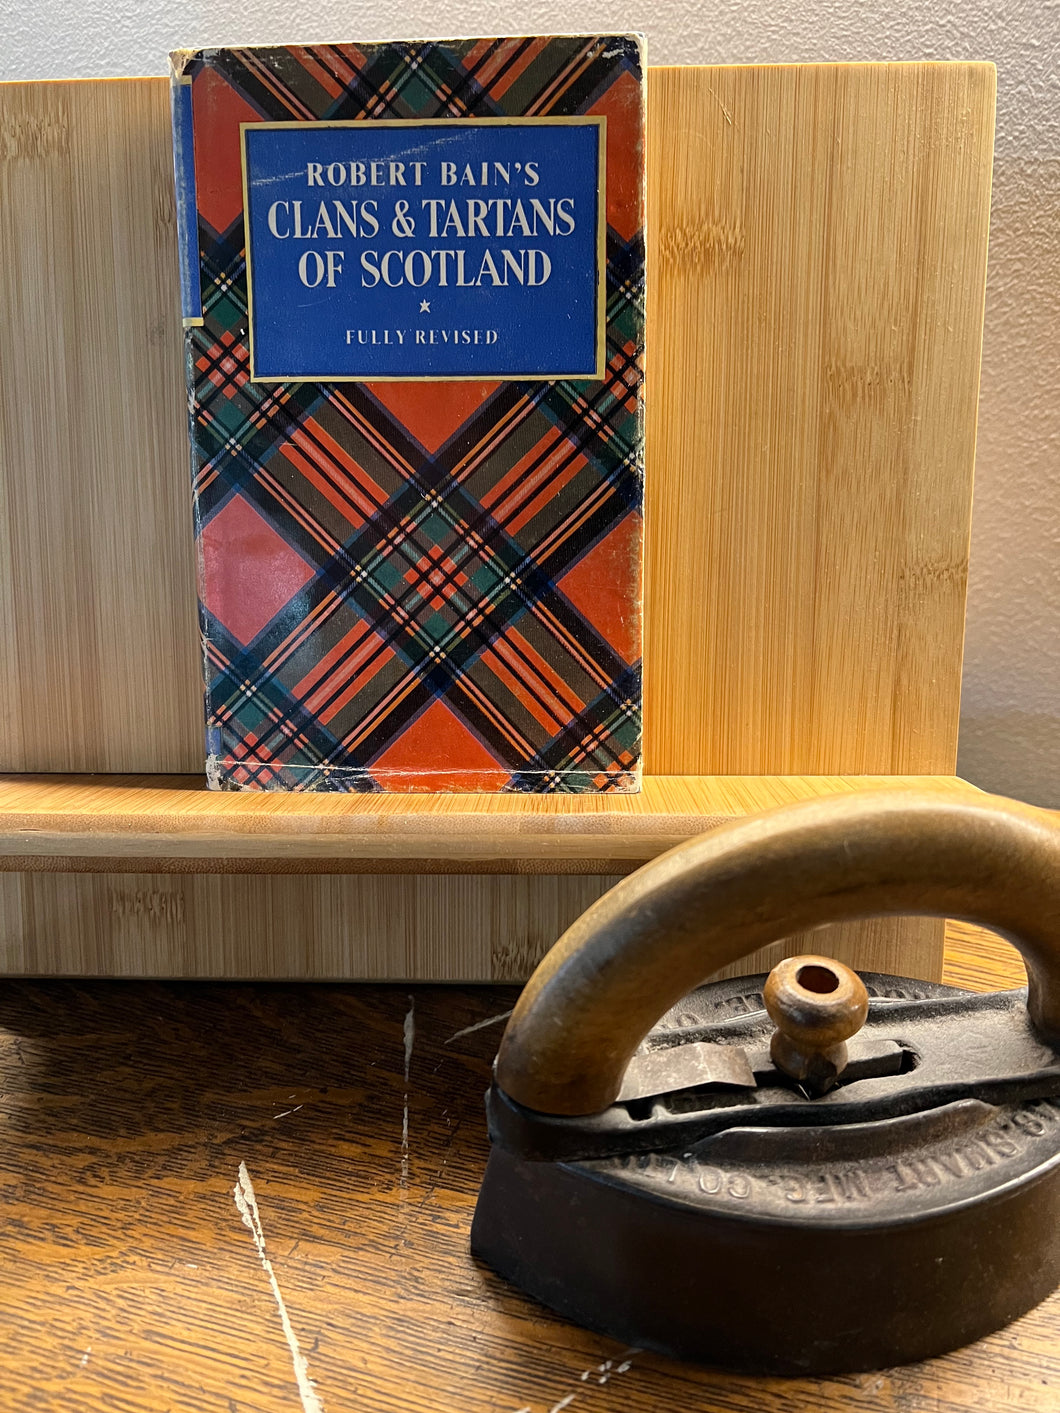 Clans & Tartans of Scotland.  Hardcover